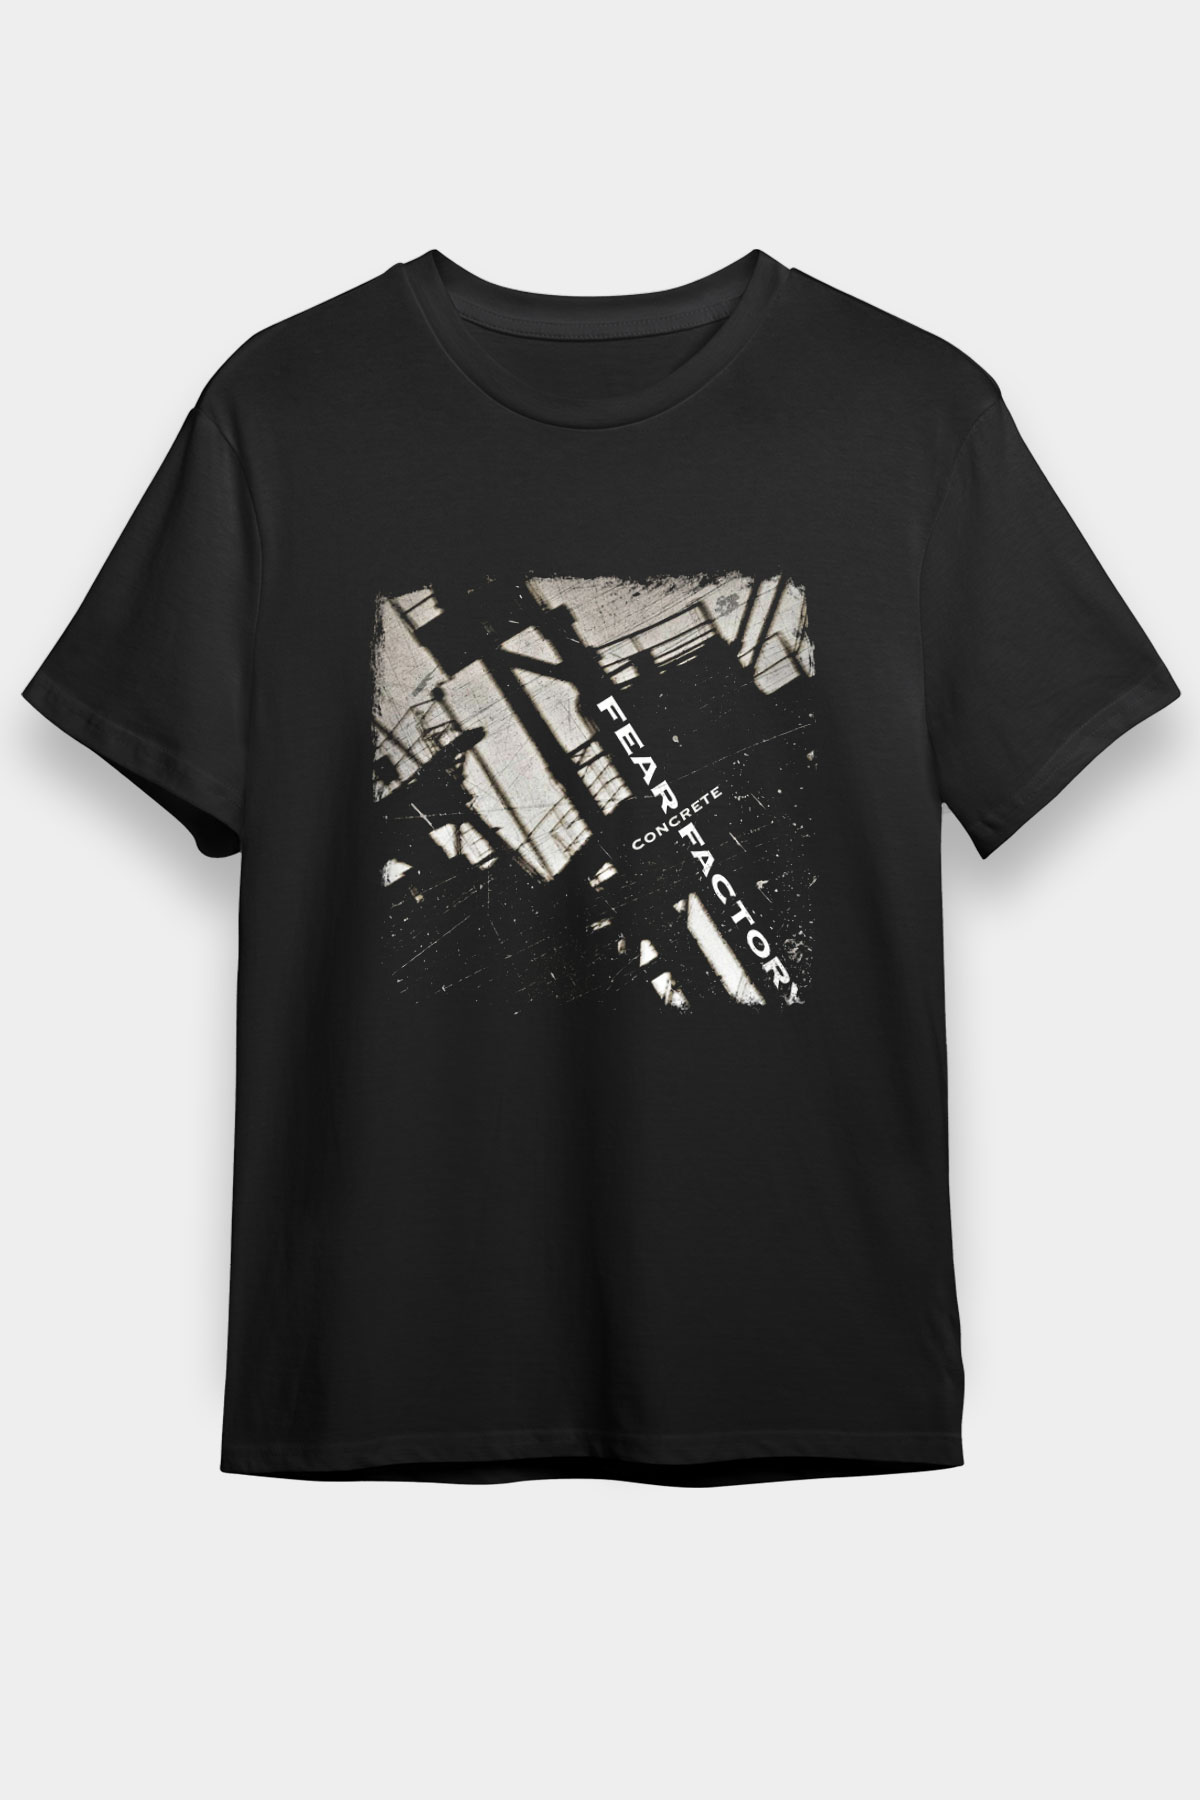 Fear Factory T shirt, Music Band  Tshirt  12